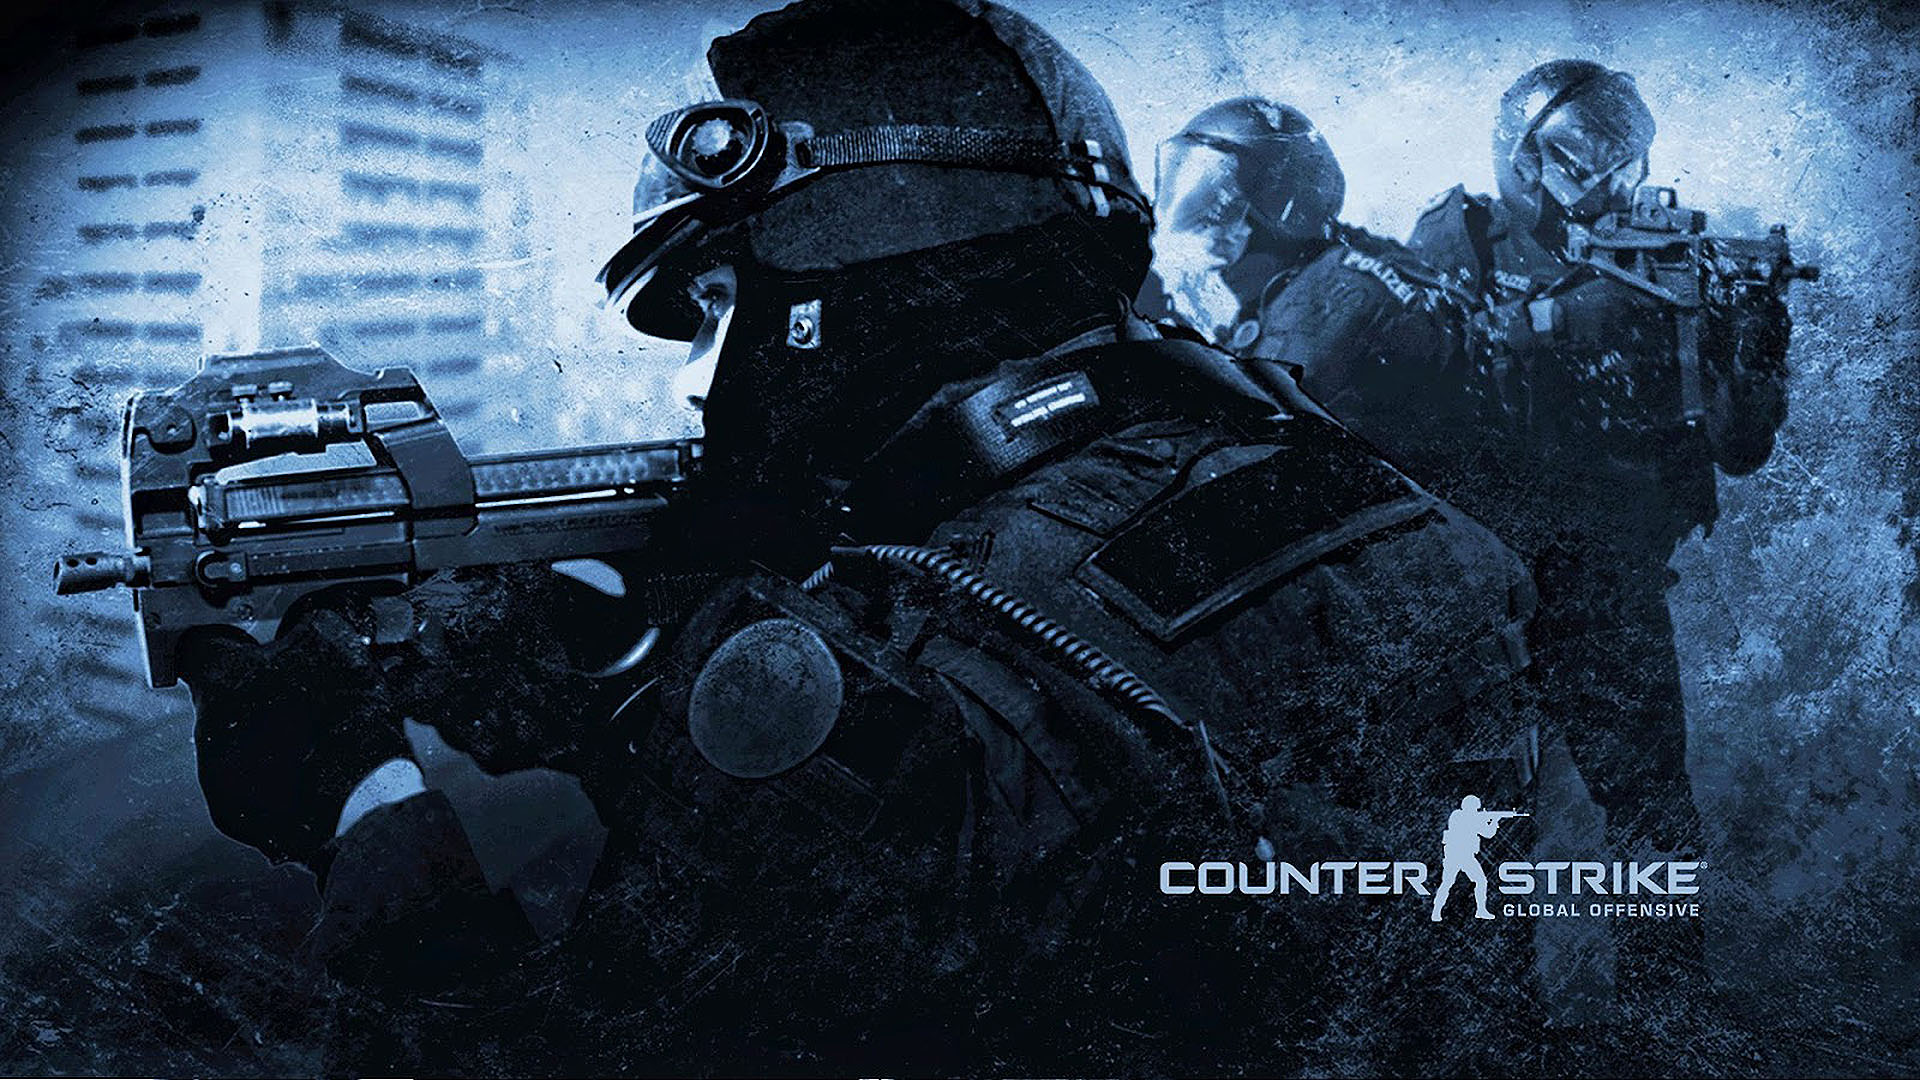 High Resolution Wallpaper | Counter-Strike: Global Offensive 1920x1080 px